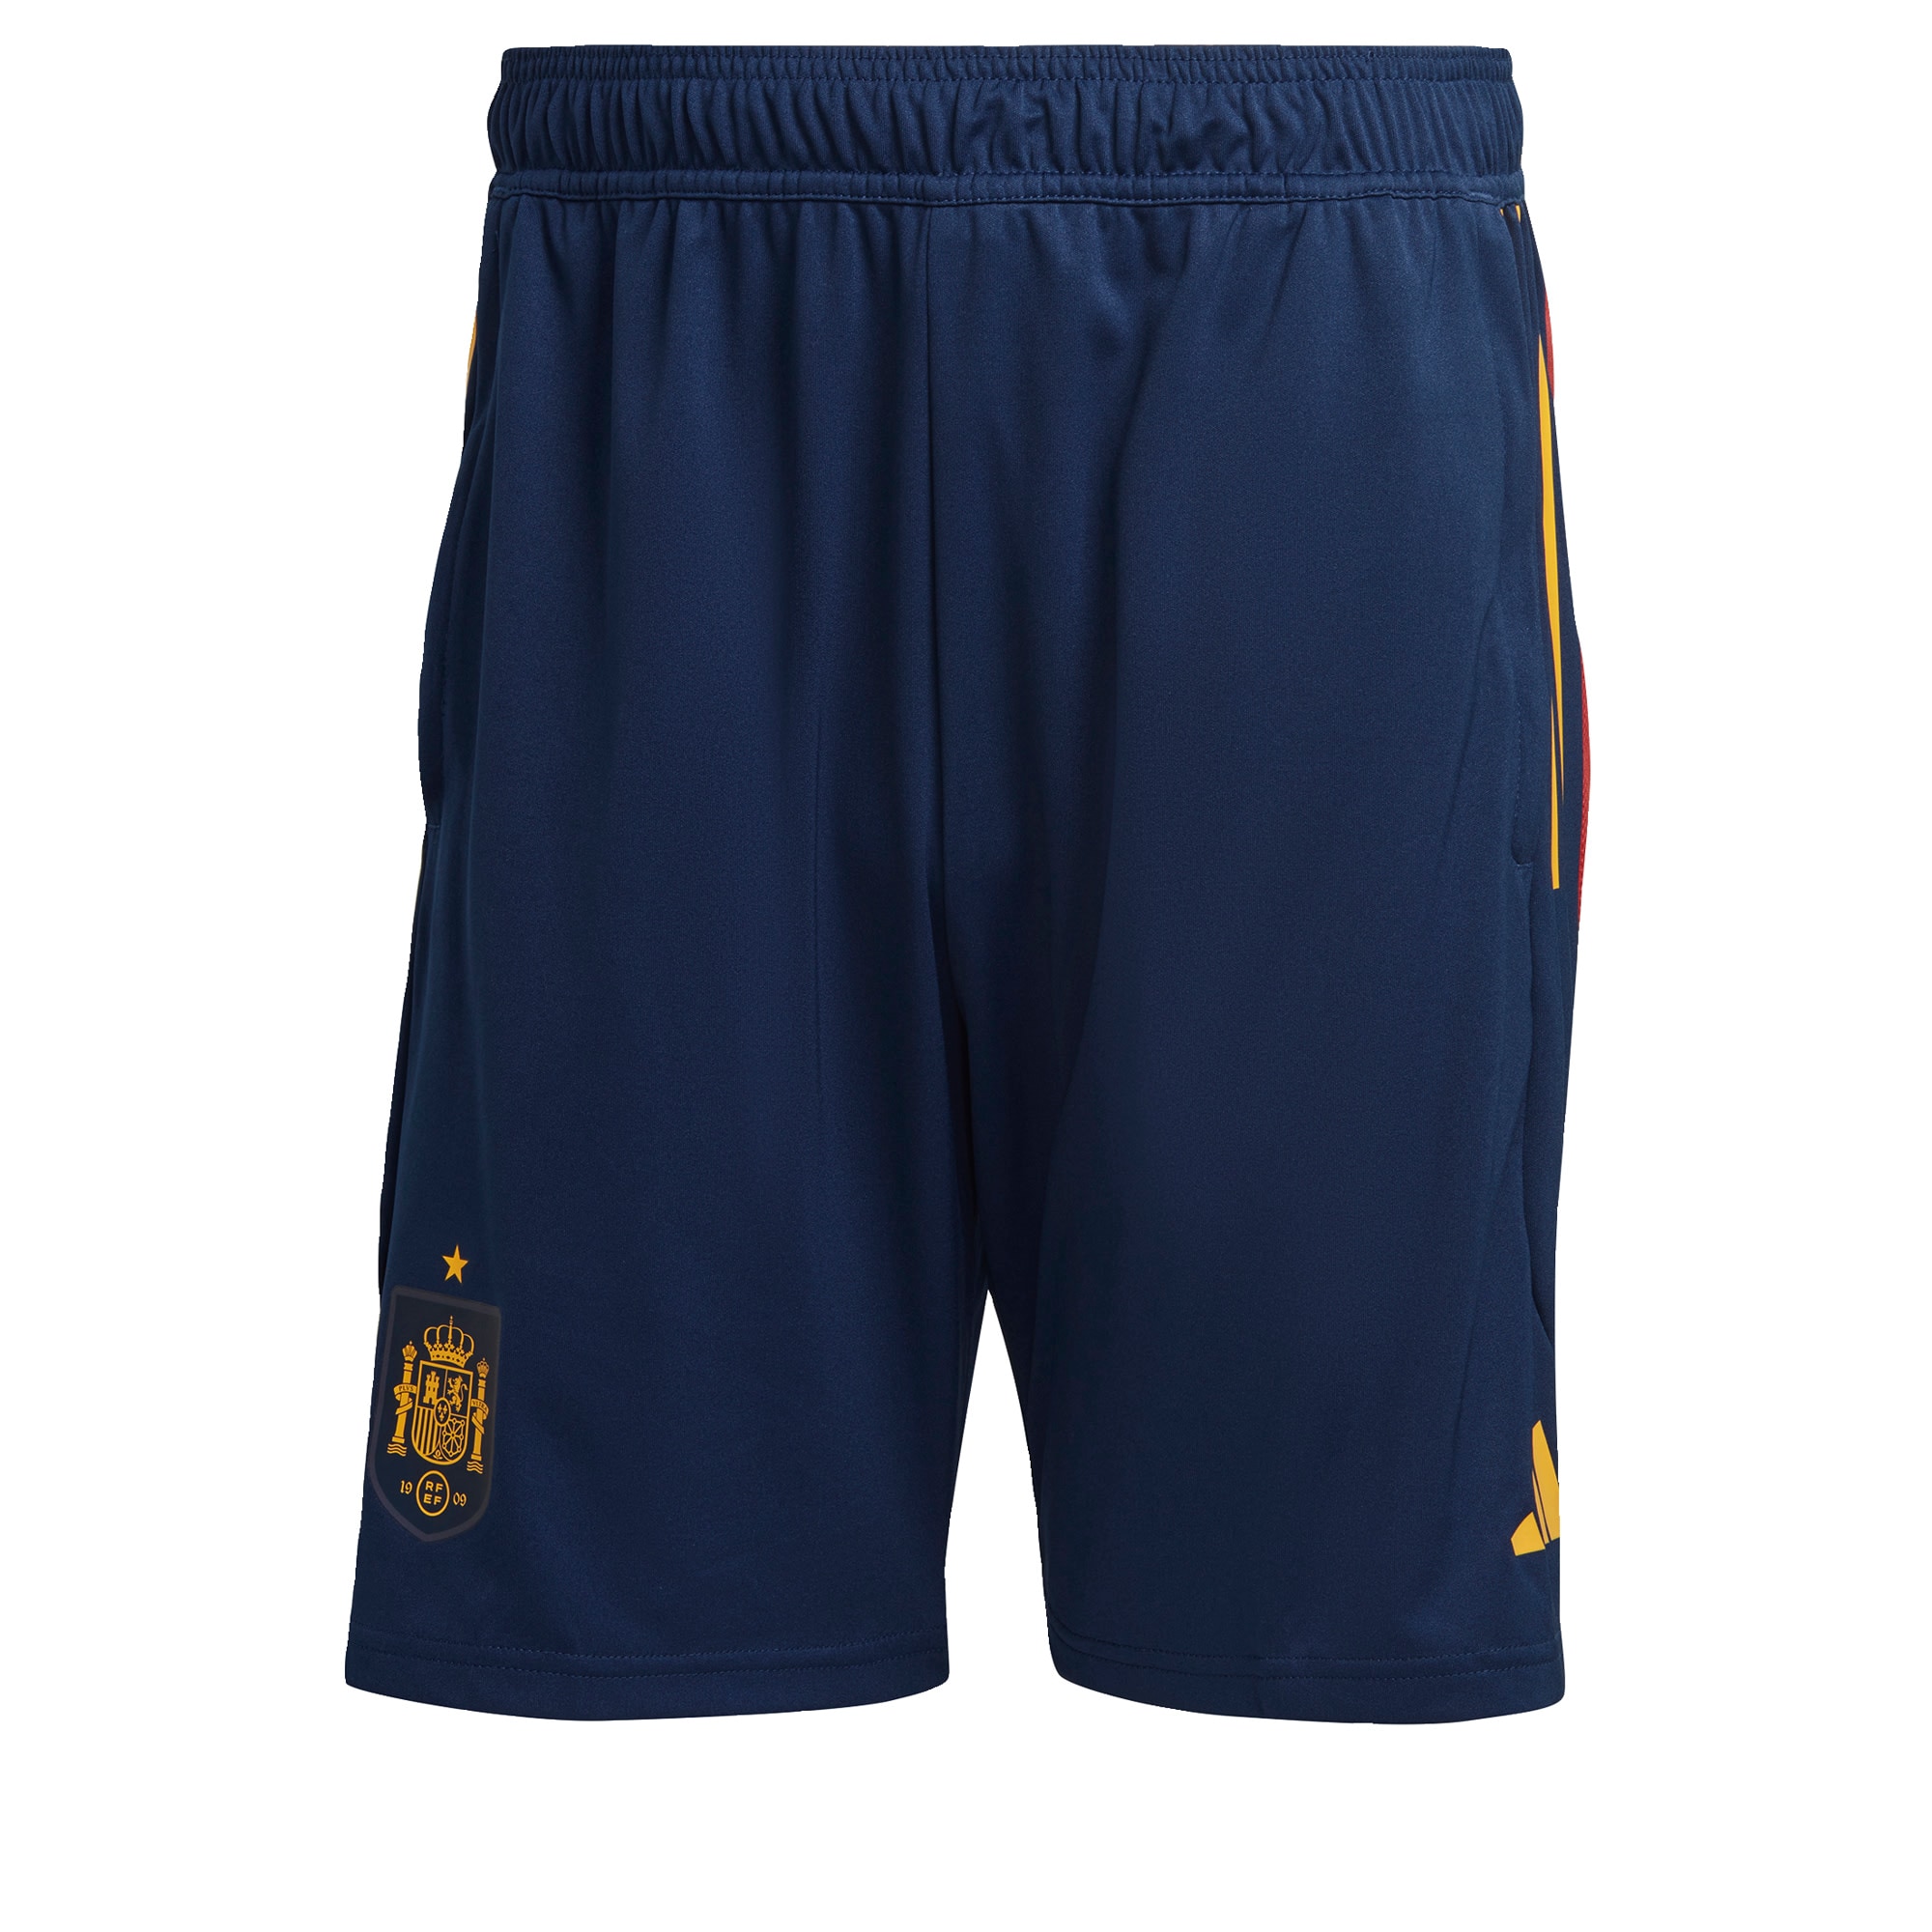 ADIDAS PERFORMANCE Športne hlače  temno modra / zlata / rdeča